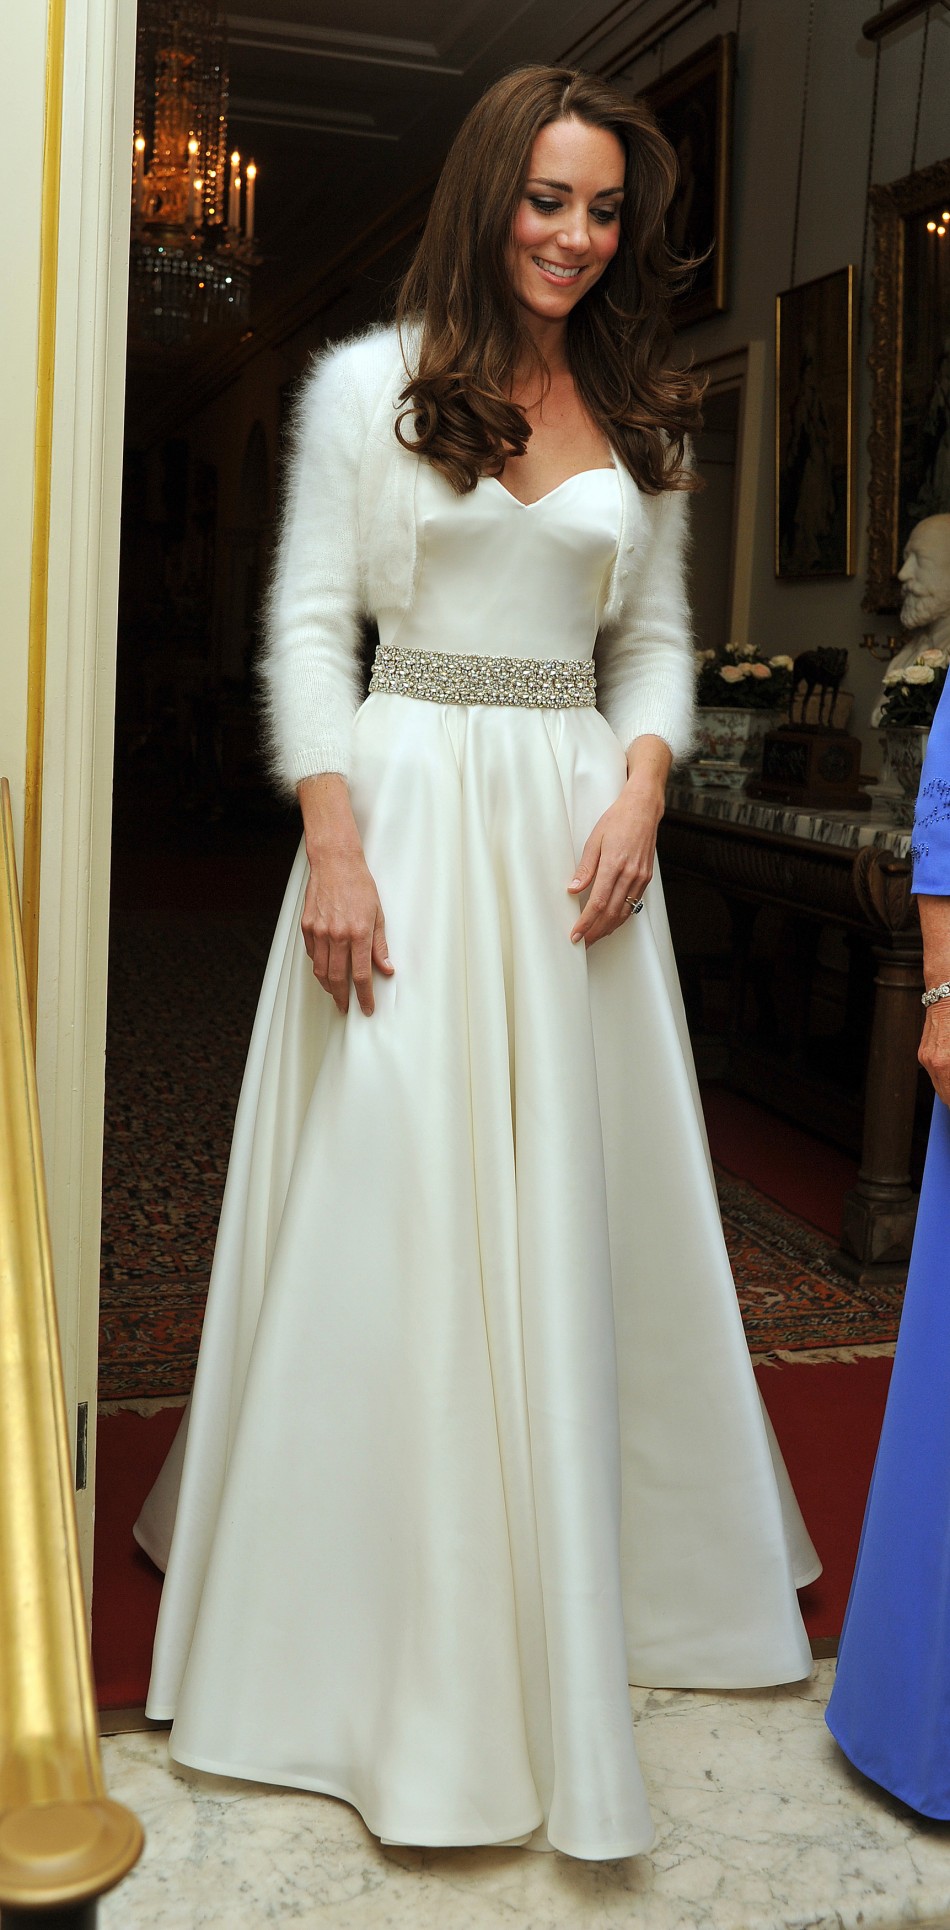 Sneak Peek into Kate Middleton's Wardrobe Get the Stunning Look of